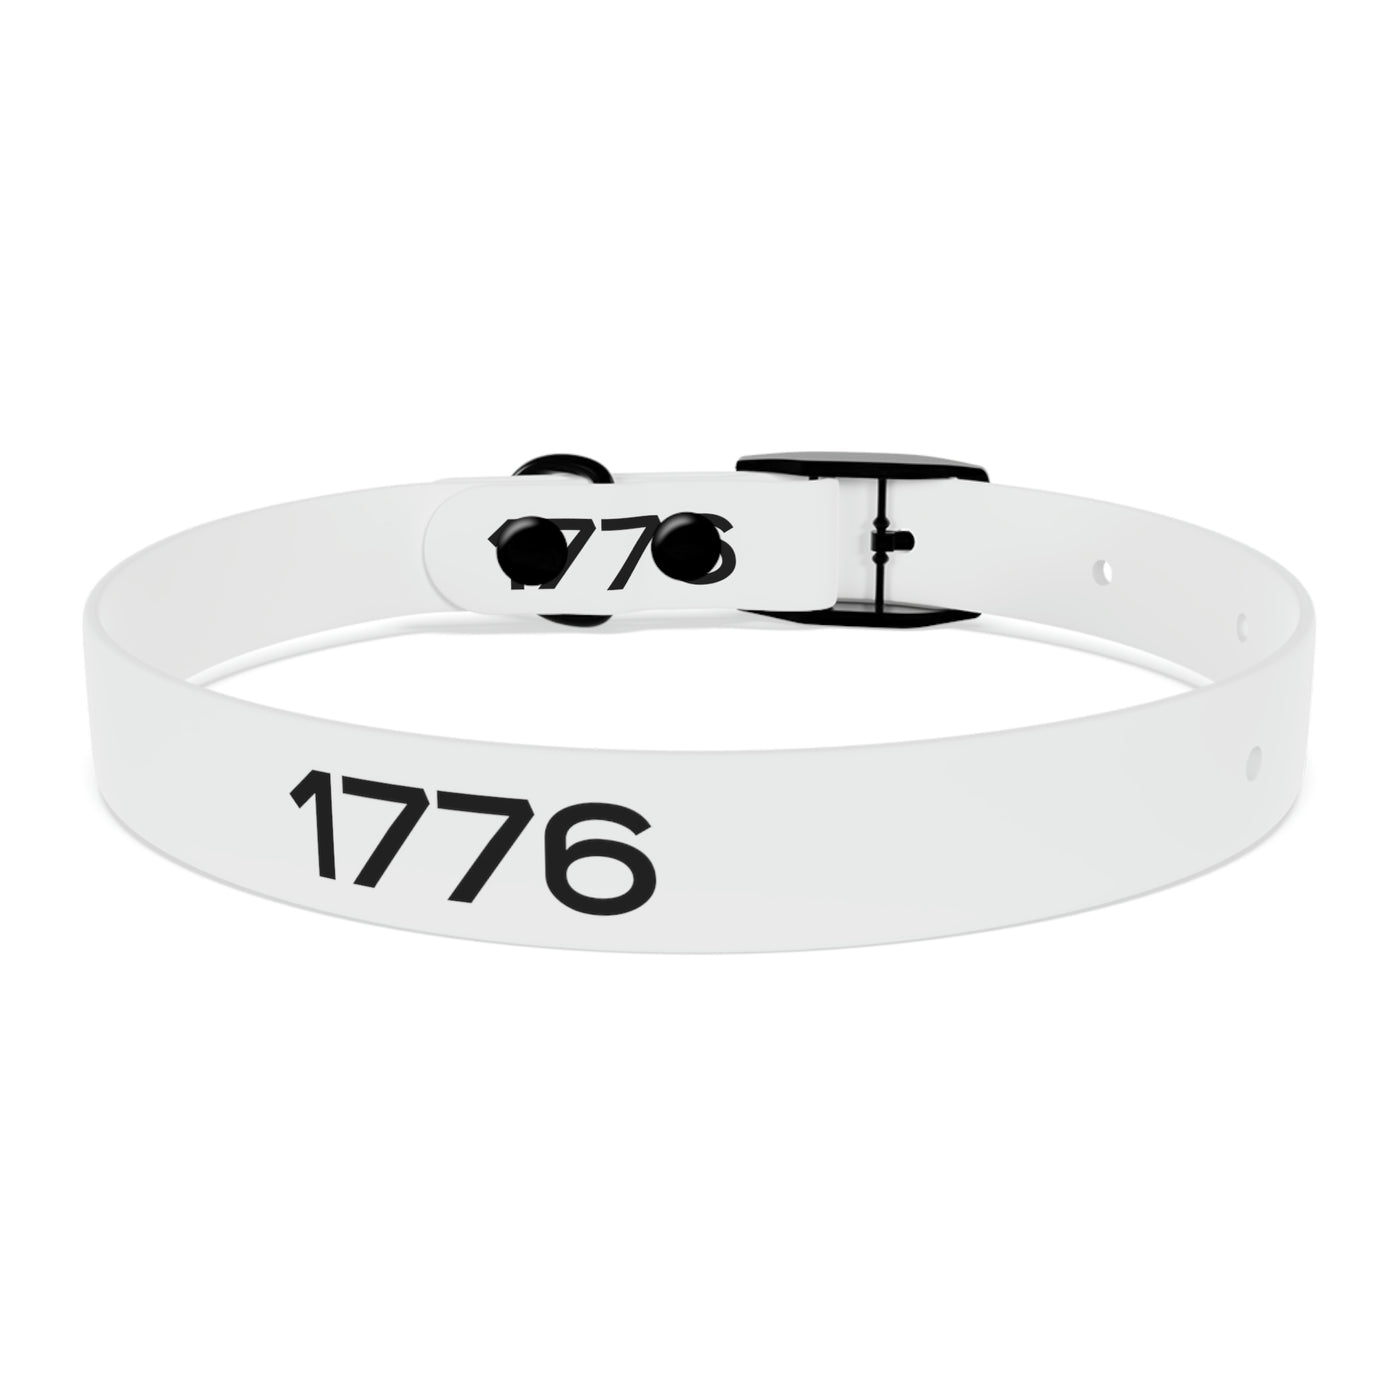 1776 Patriotic Dog Collar - Freedom First Supply